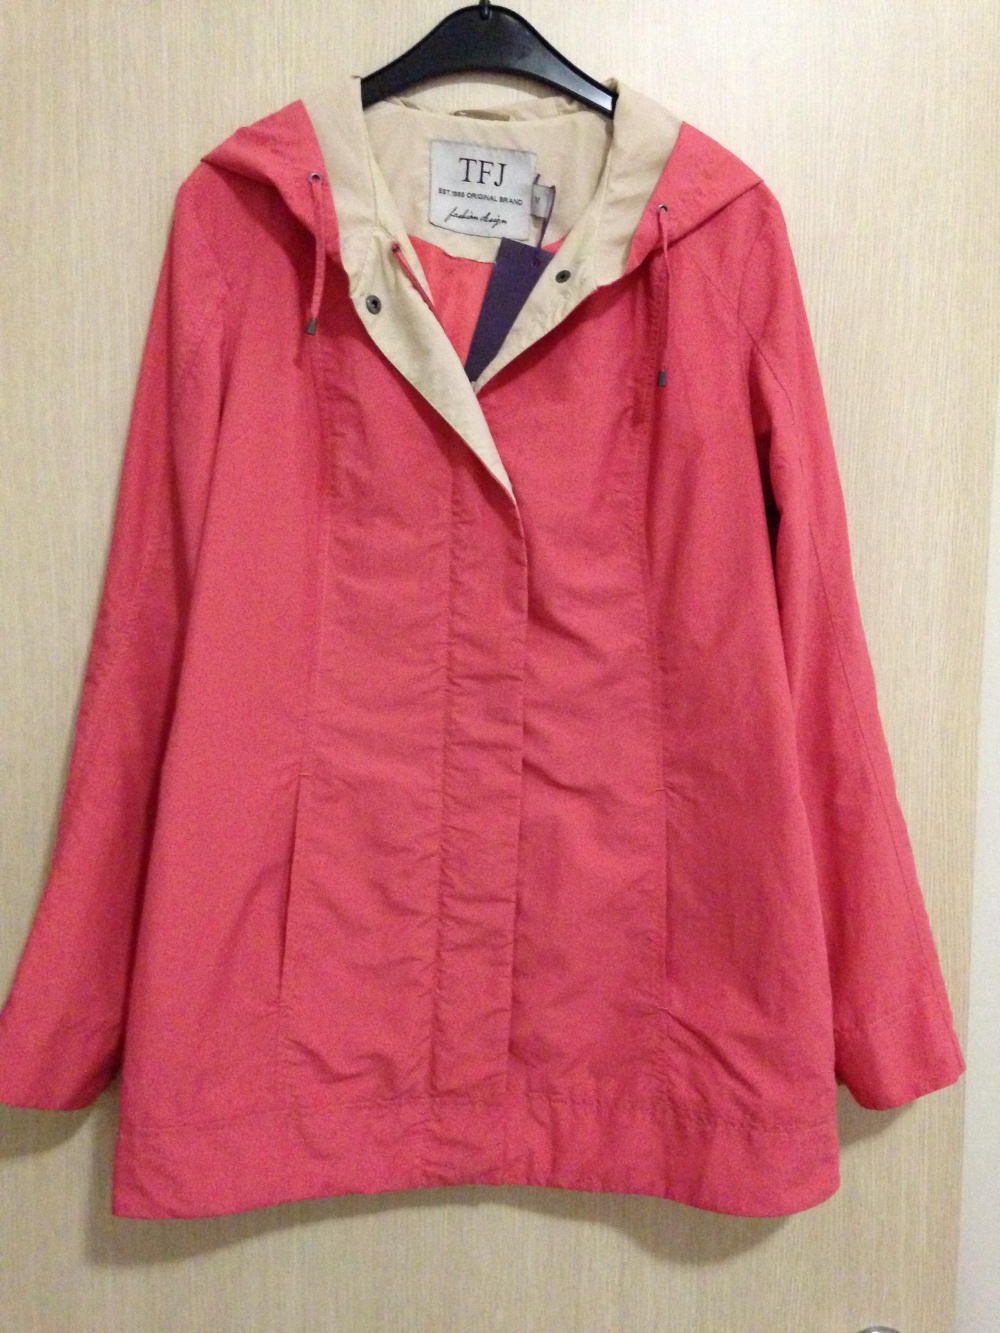 Курточка - плащик " TGJ ", 44-46 размер, Германия.